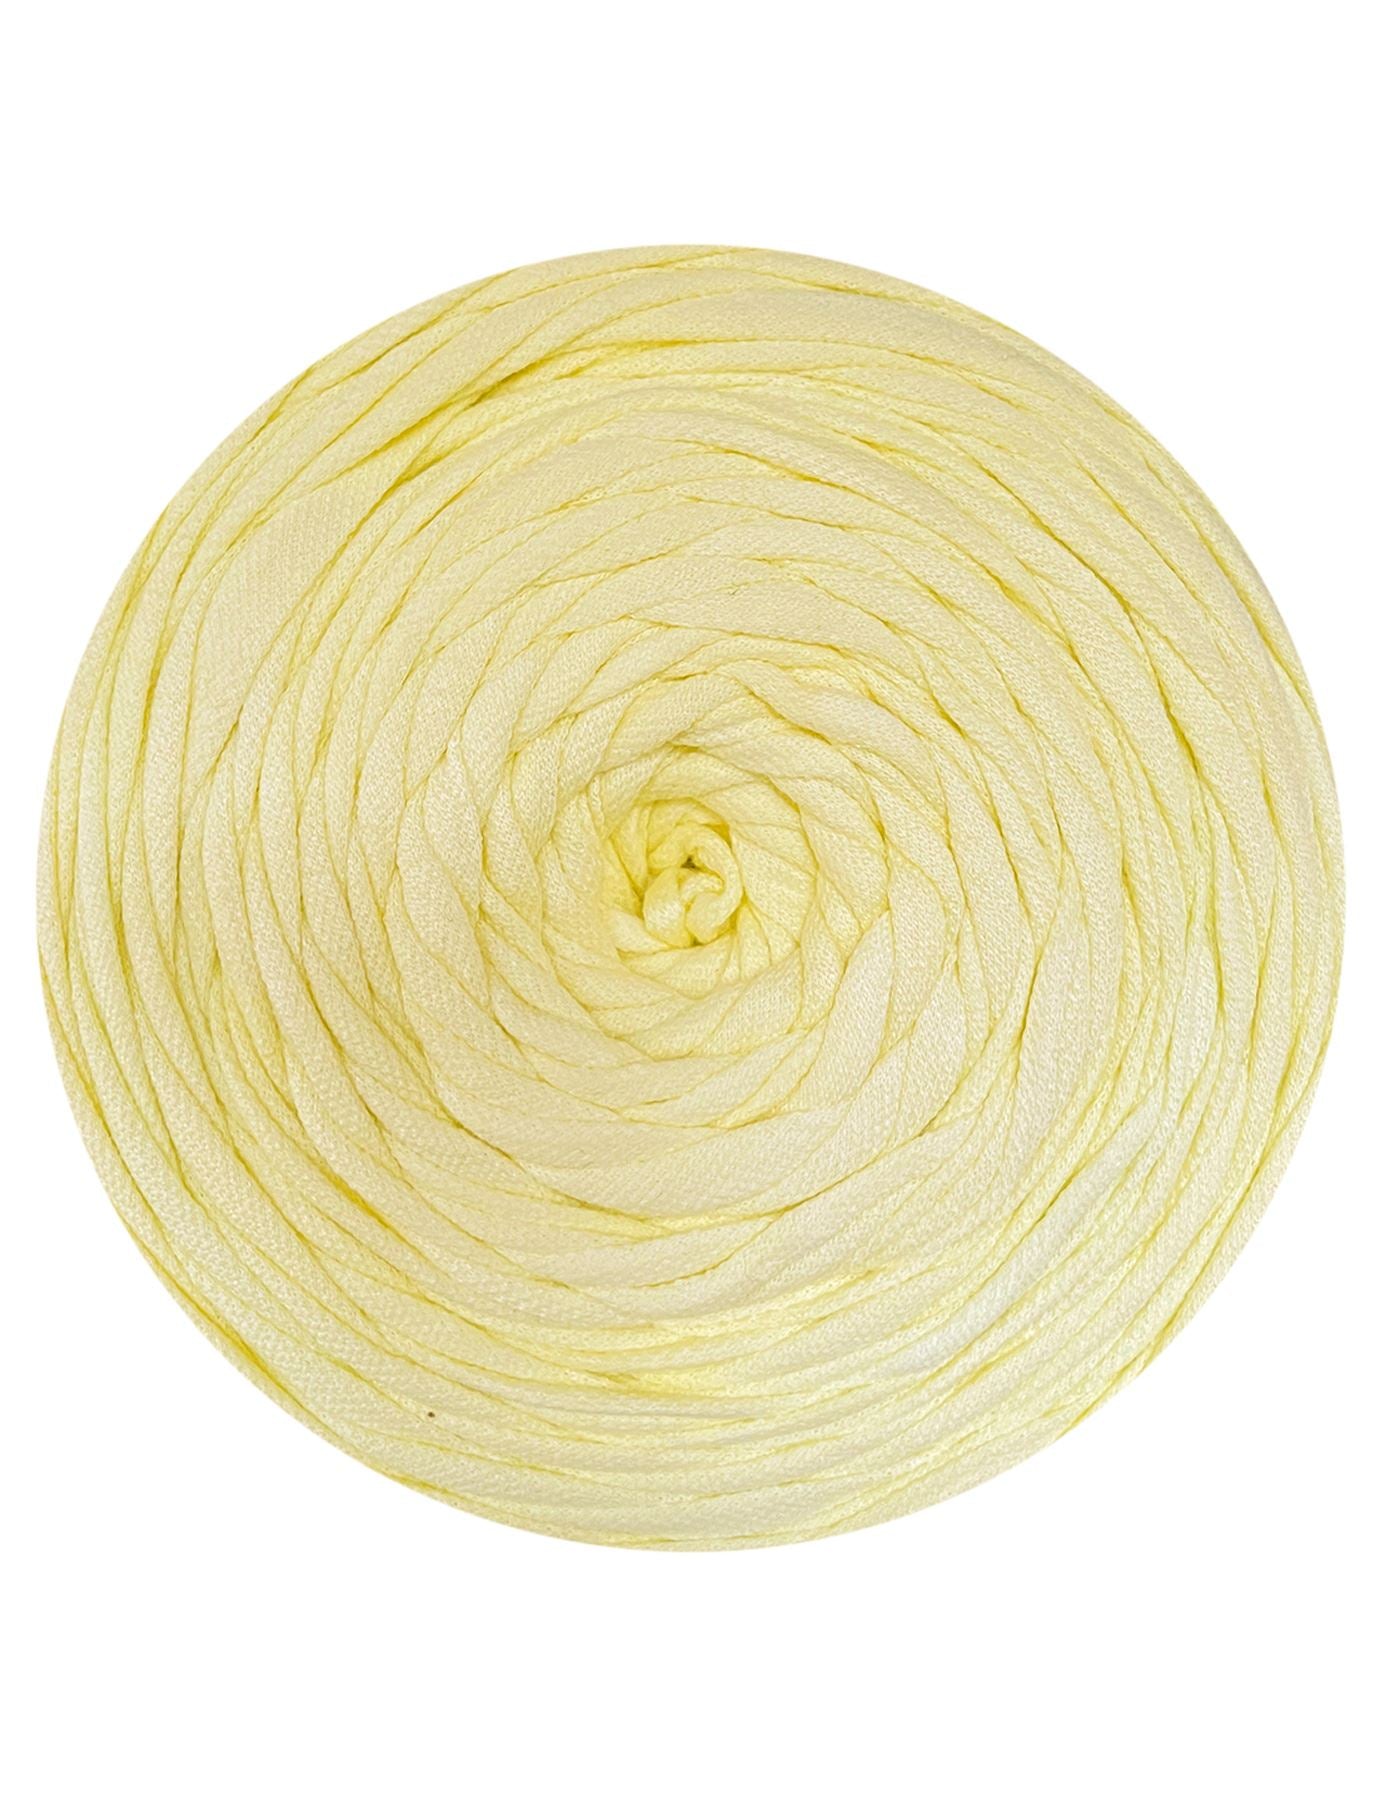 Pale polo yellow t-shirt yarn (100-120m)